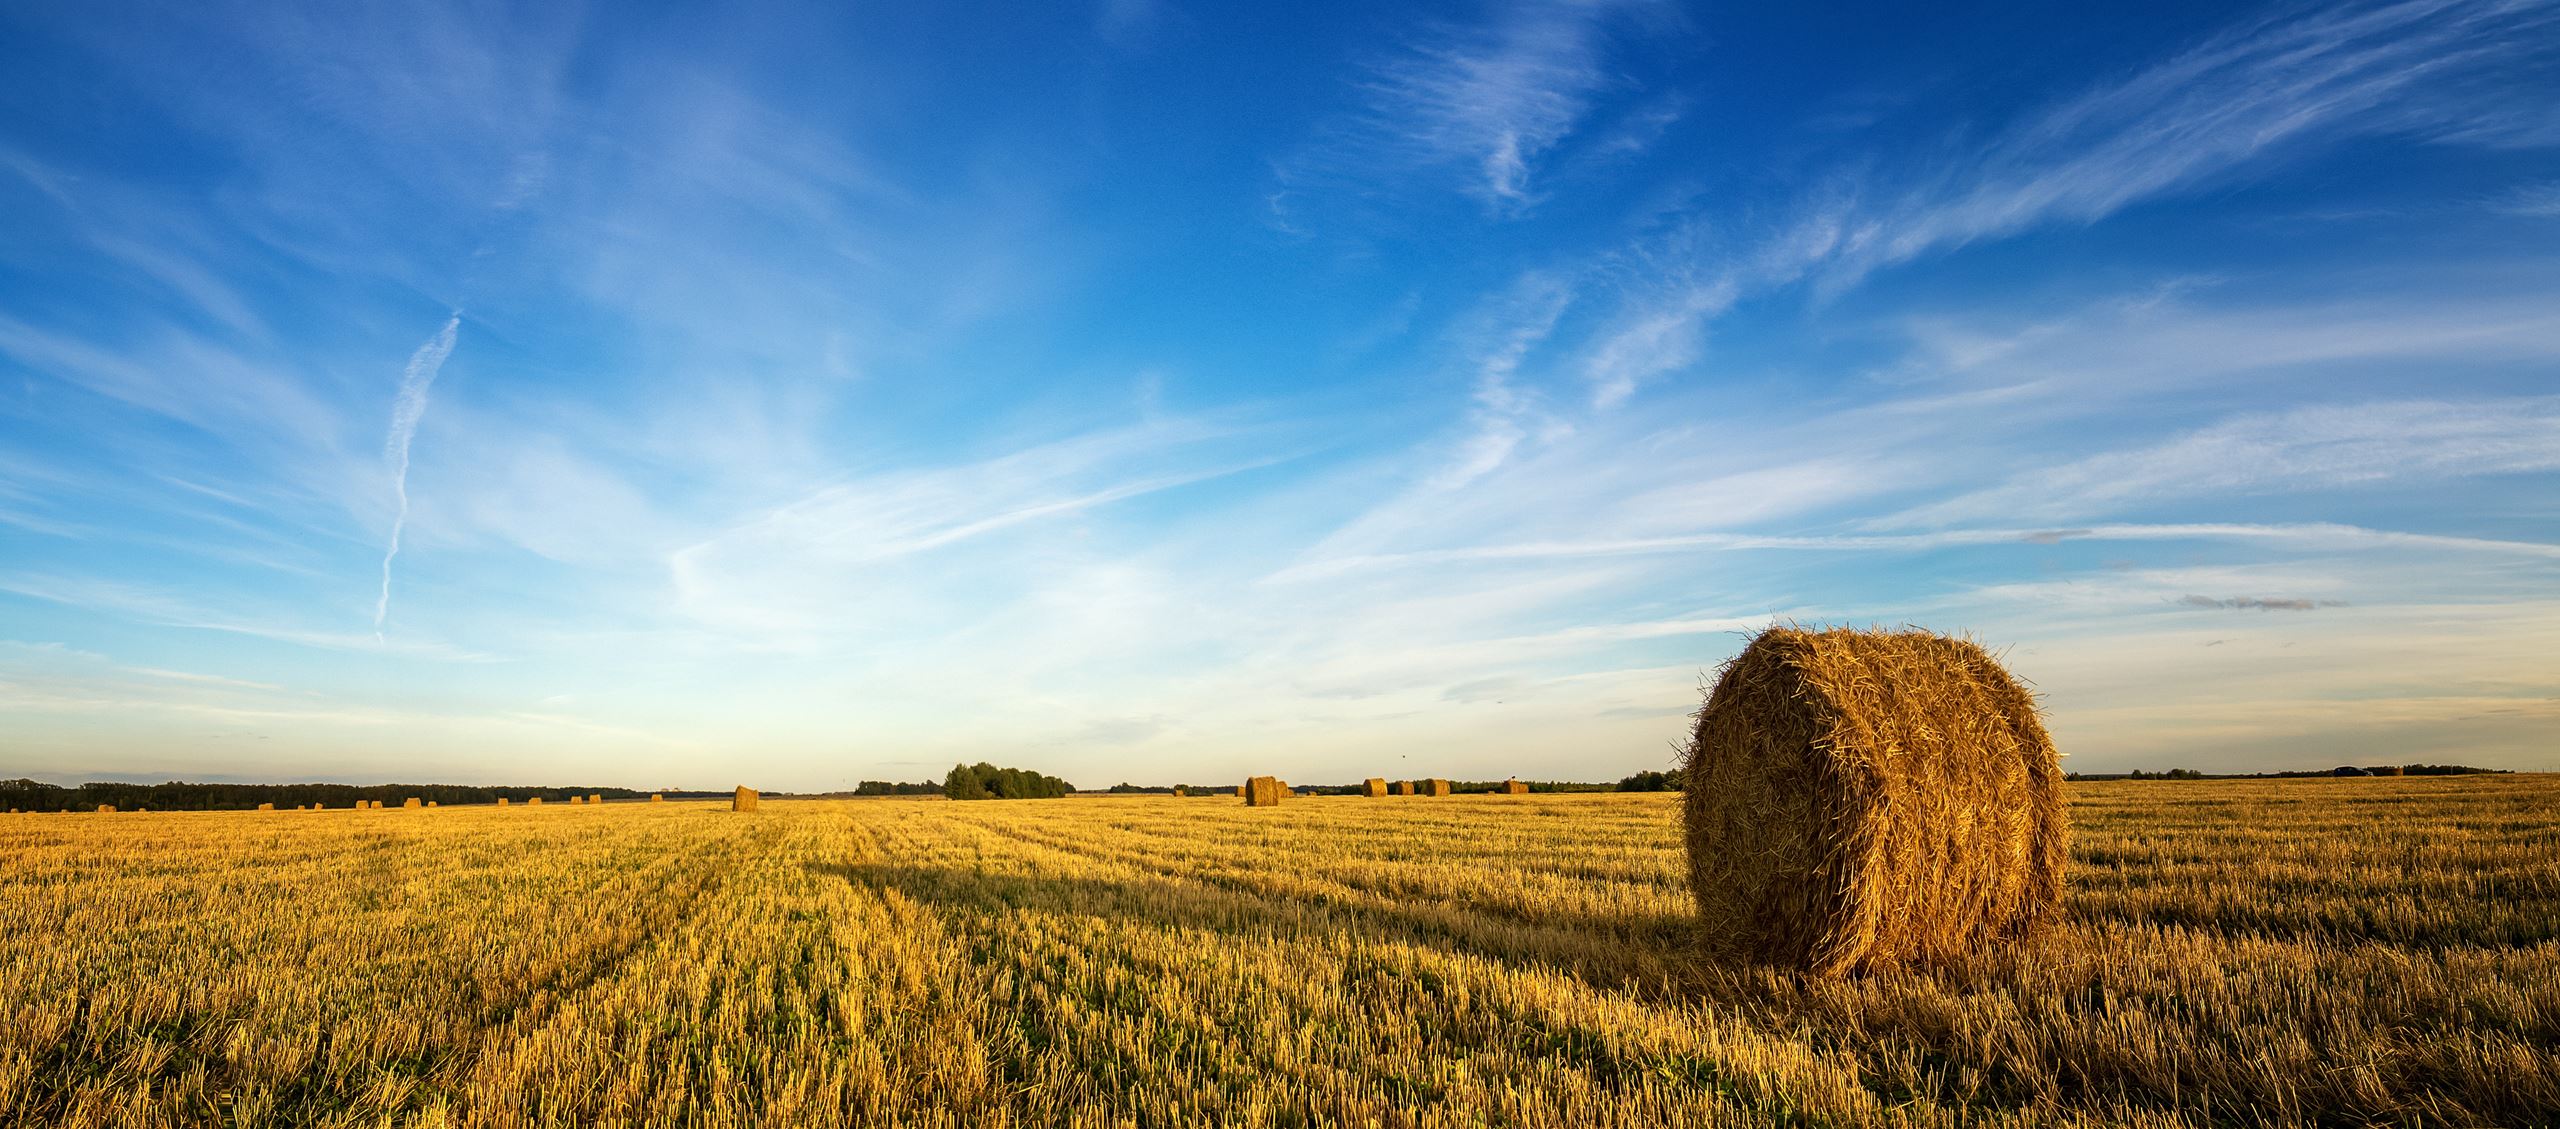 Wheat Field with Barrels